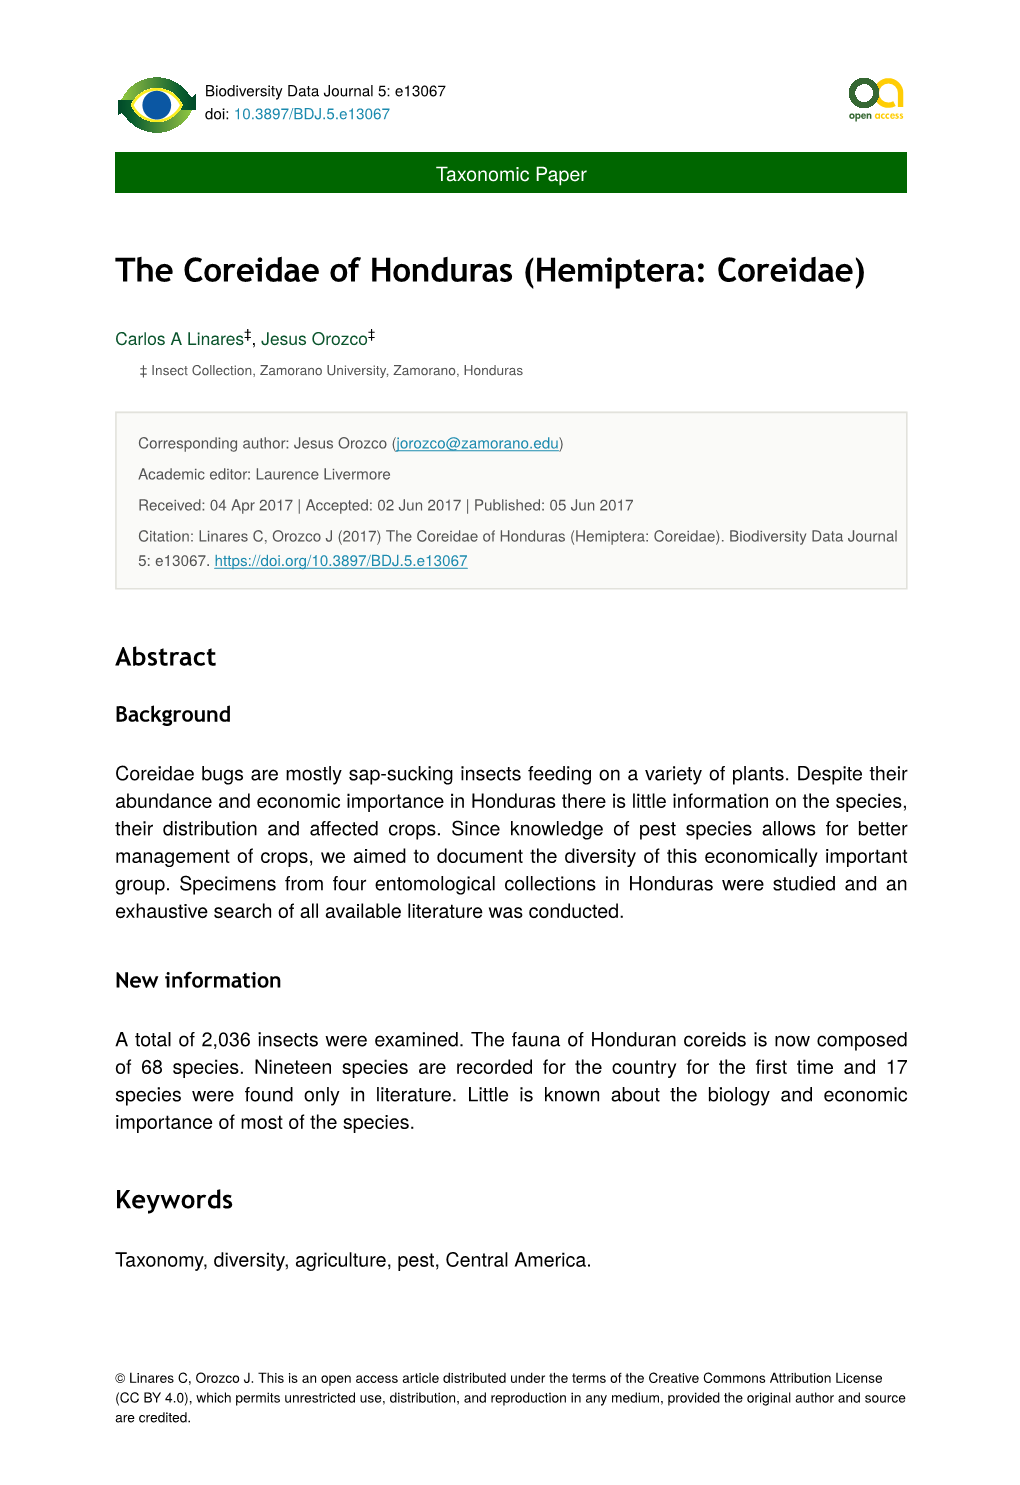 The Coreidae of Honduras (Hemiptera: Coreidae)